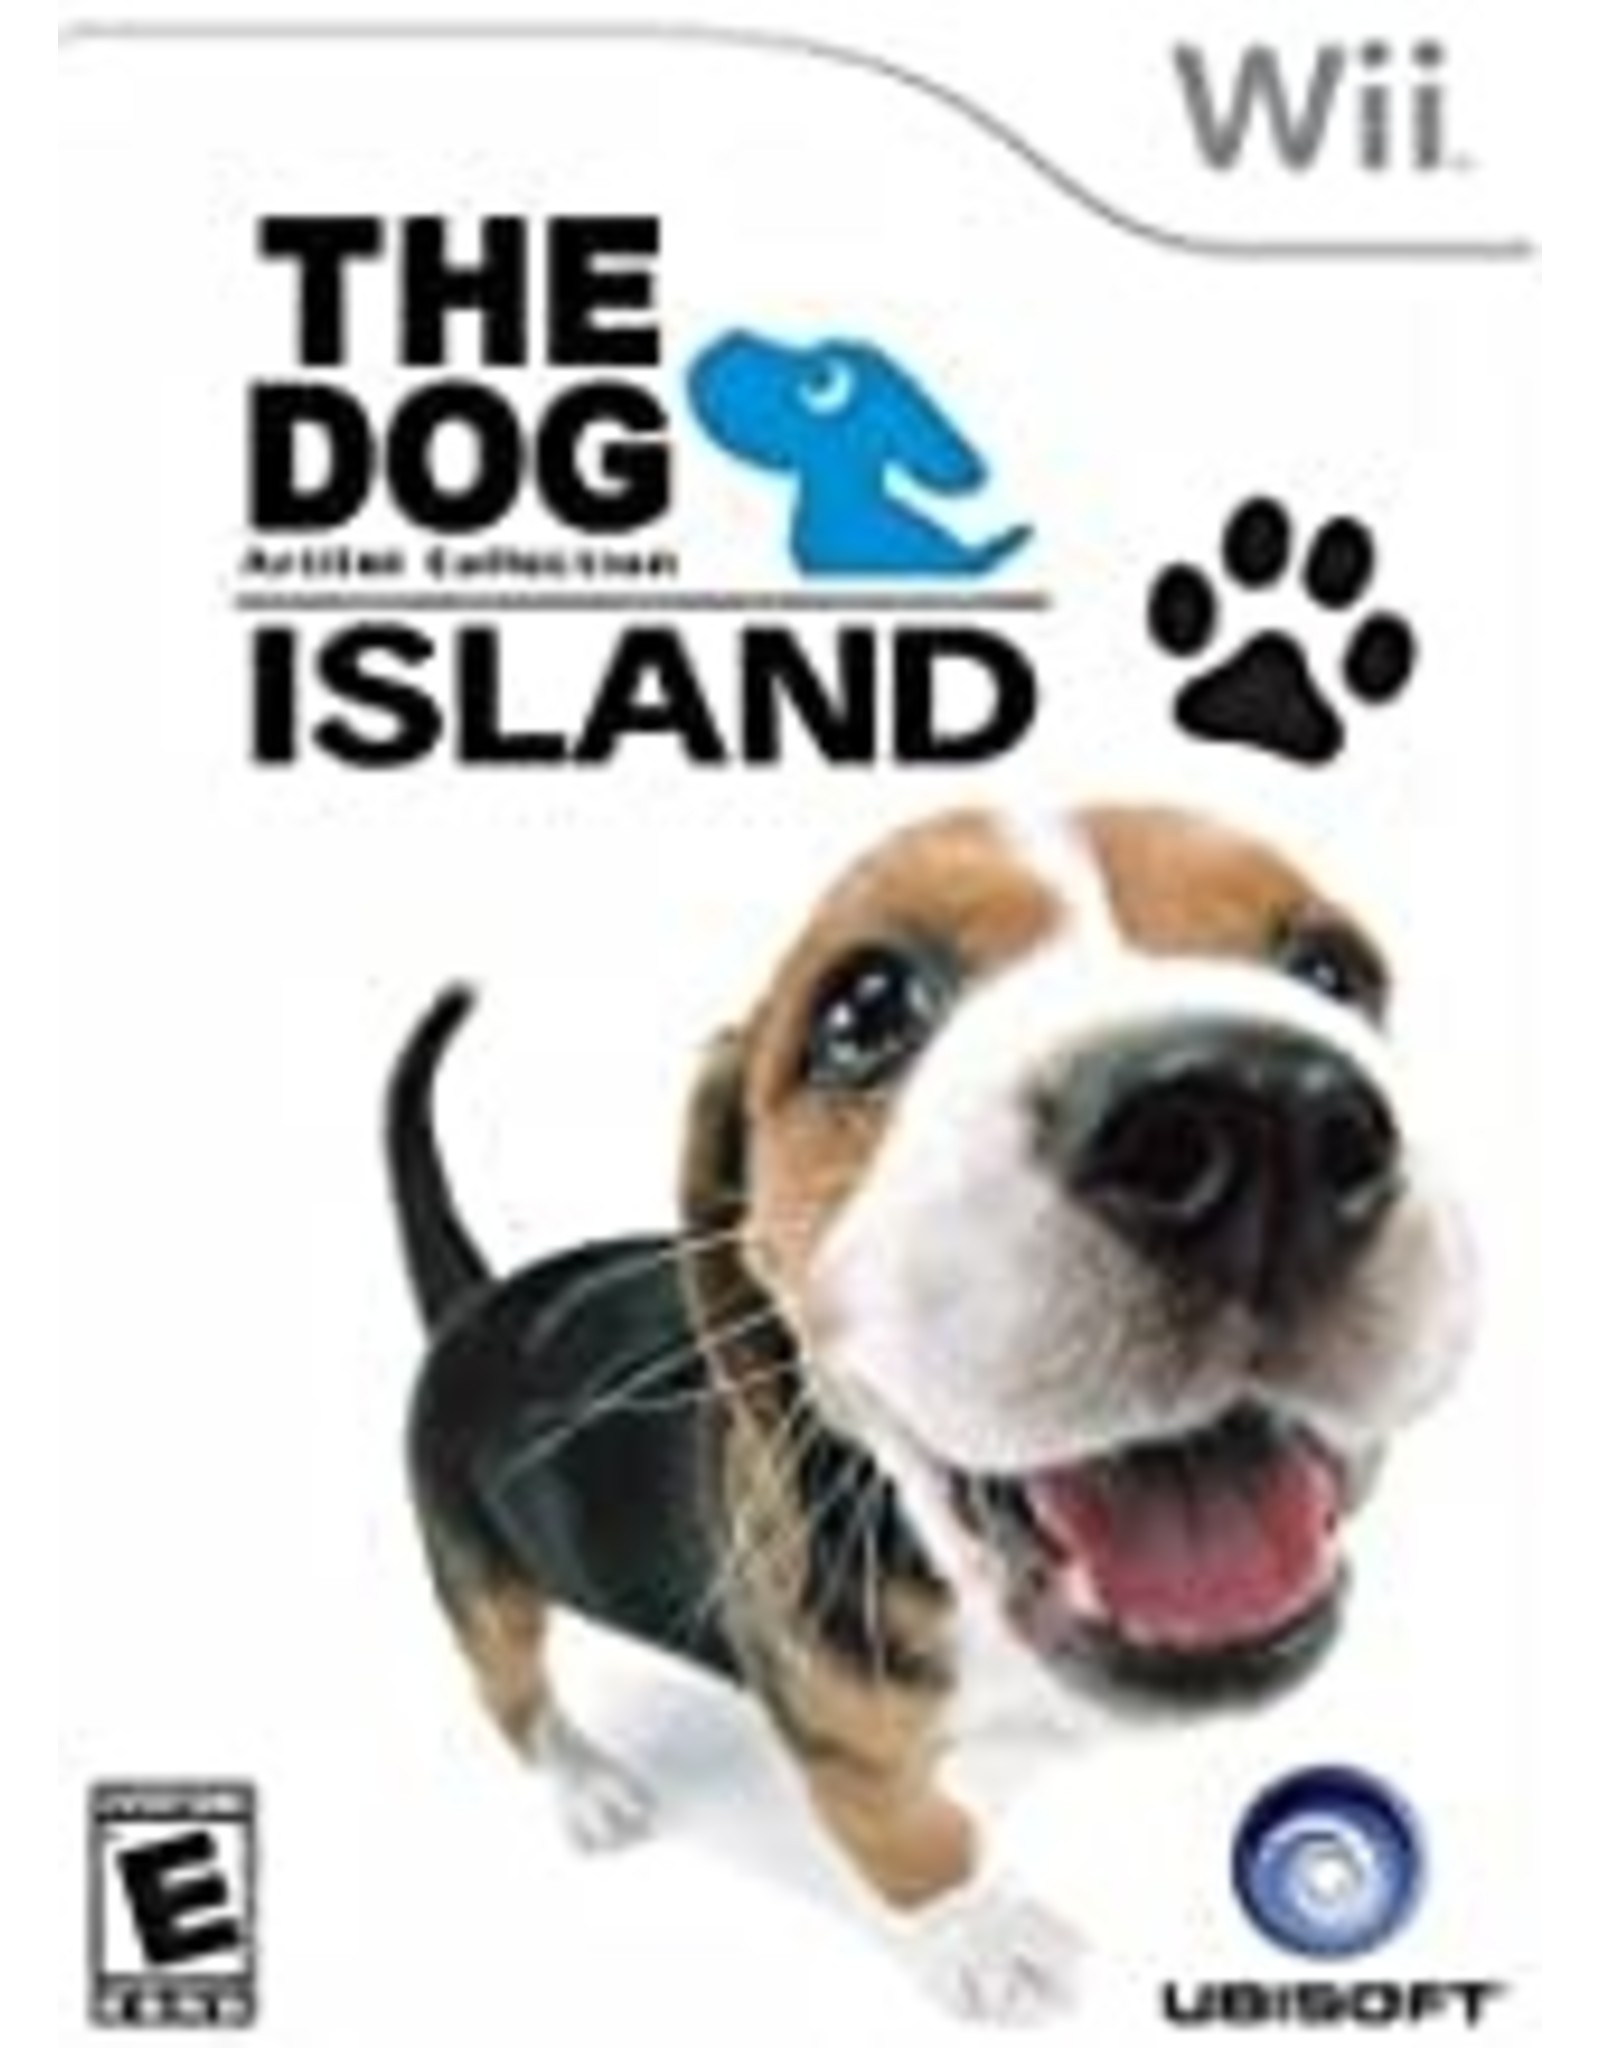 Wii Dog Island, The (CiB)